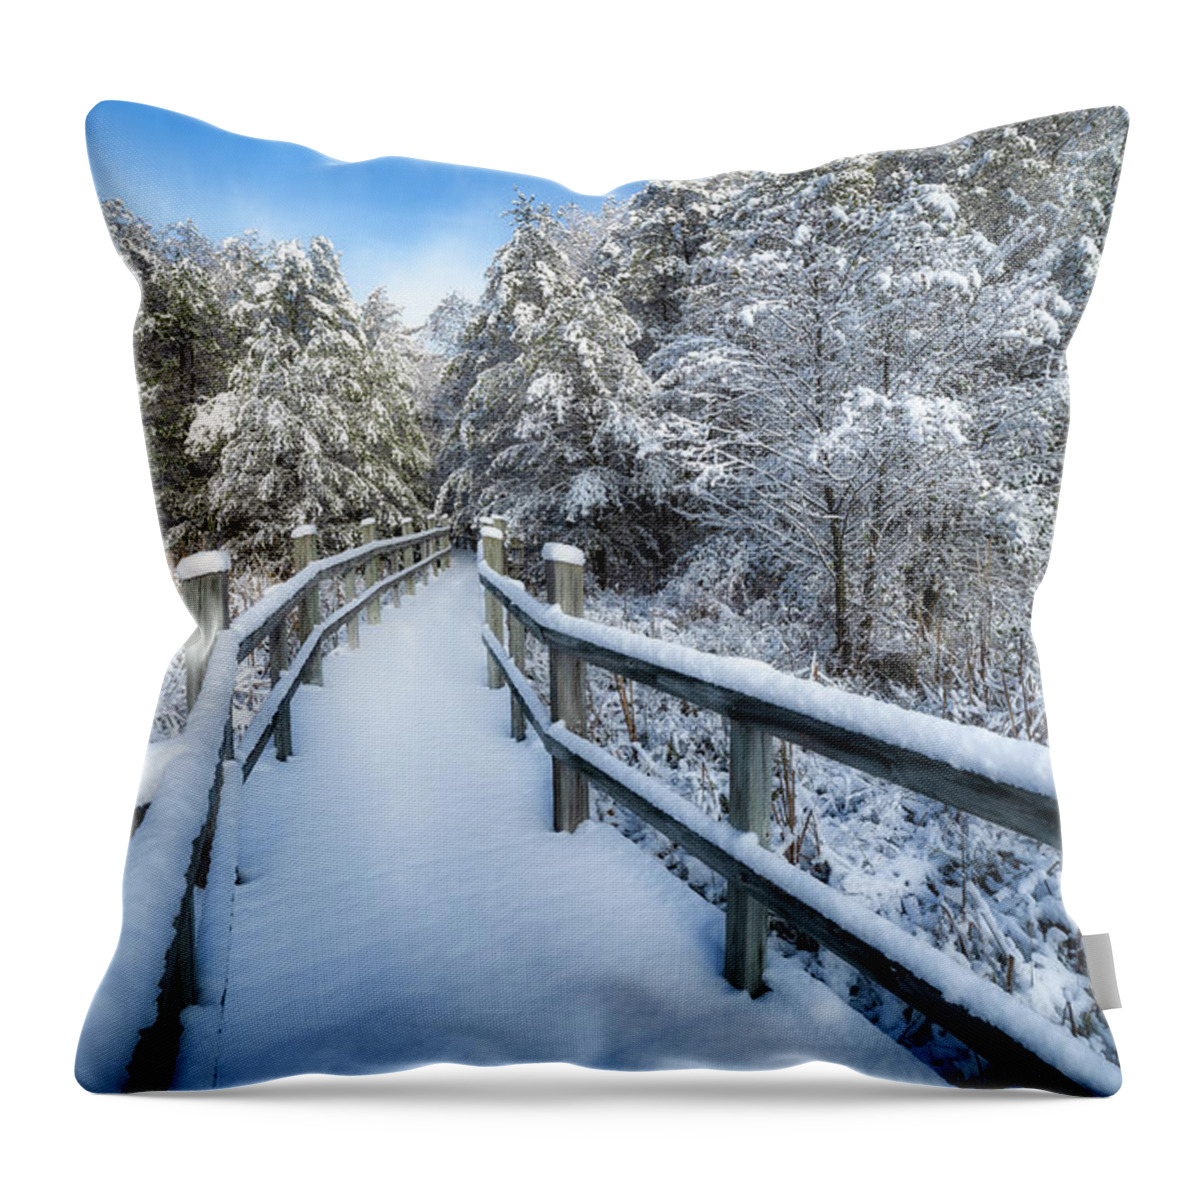 Boardwalk Throw Pillow featuring the photograph Winter Wonderland by Brad Bellisle